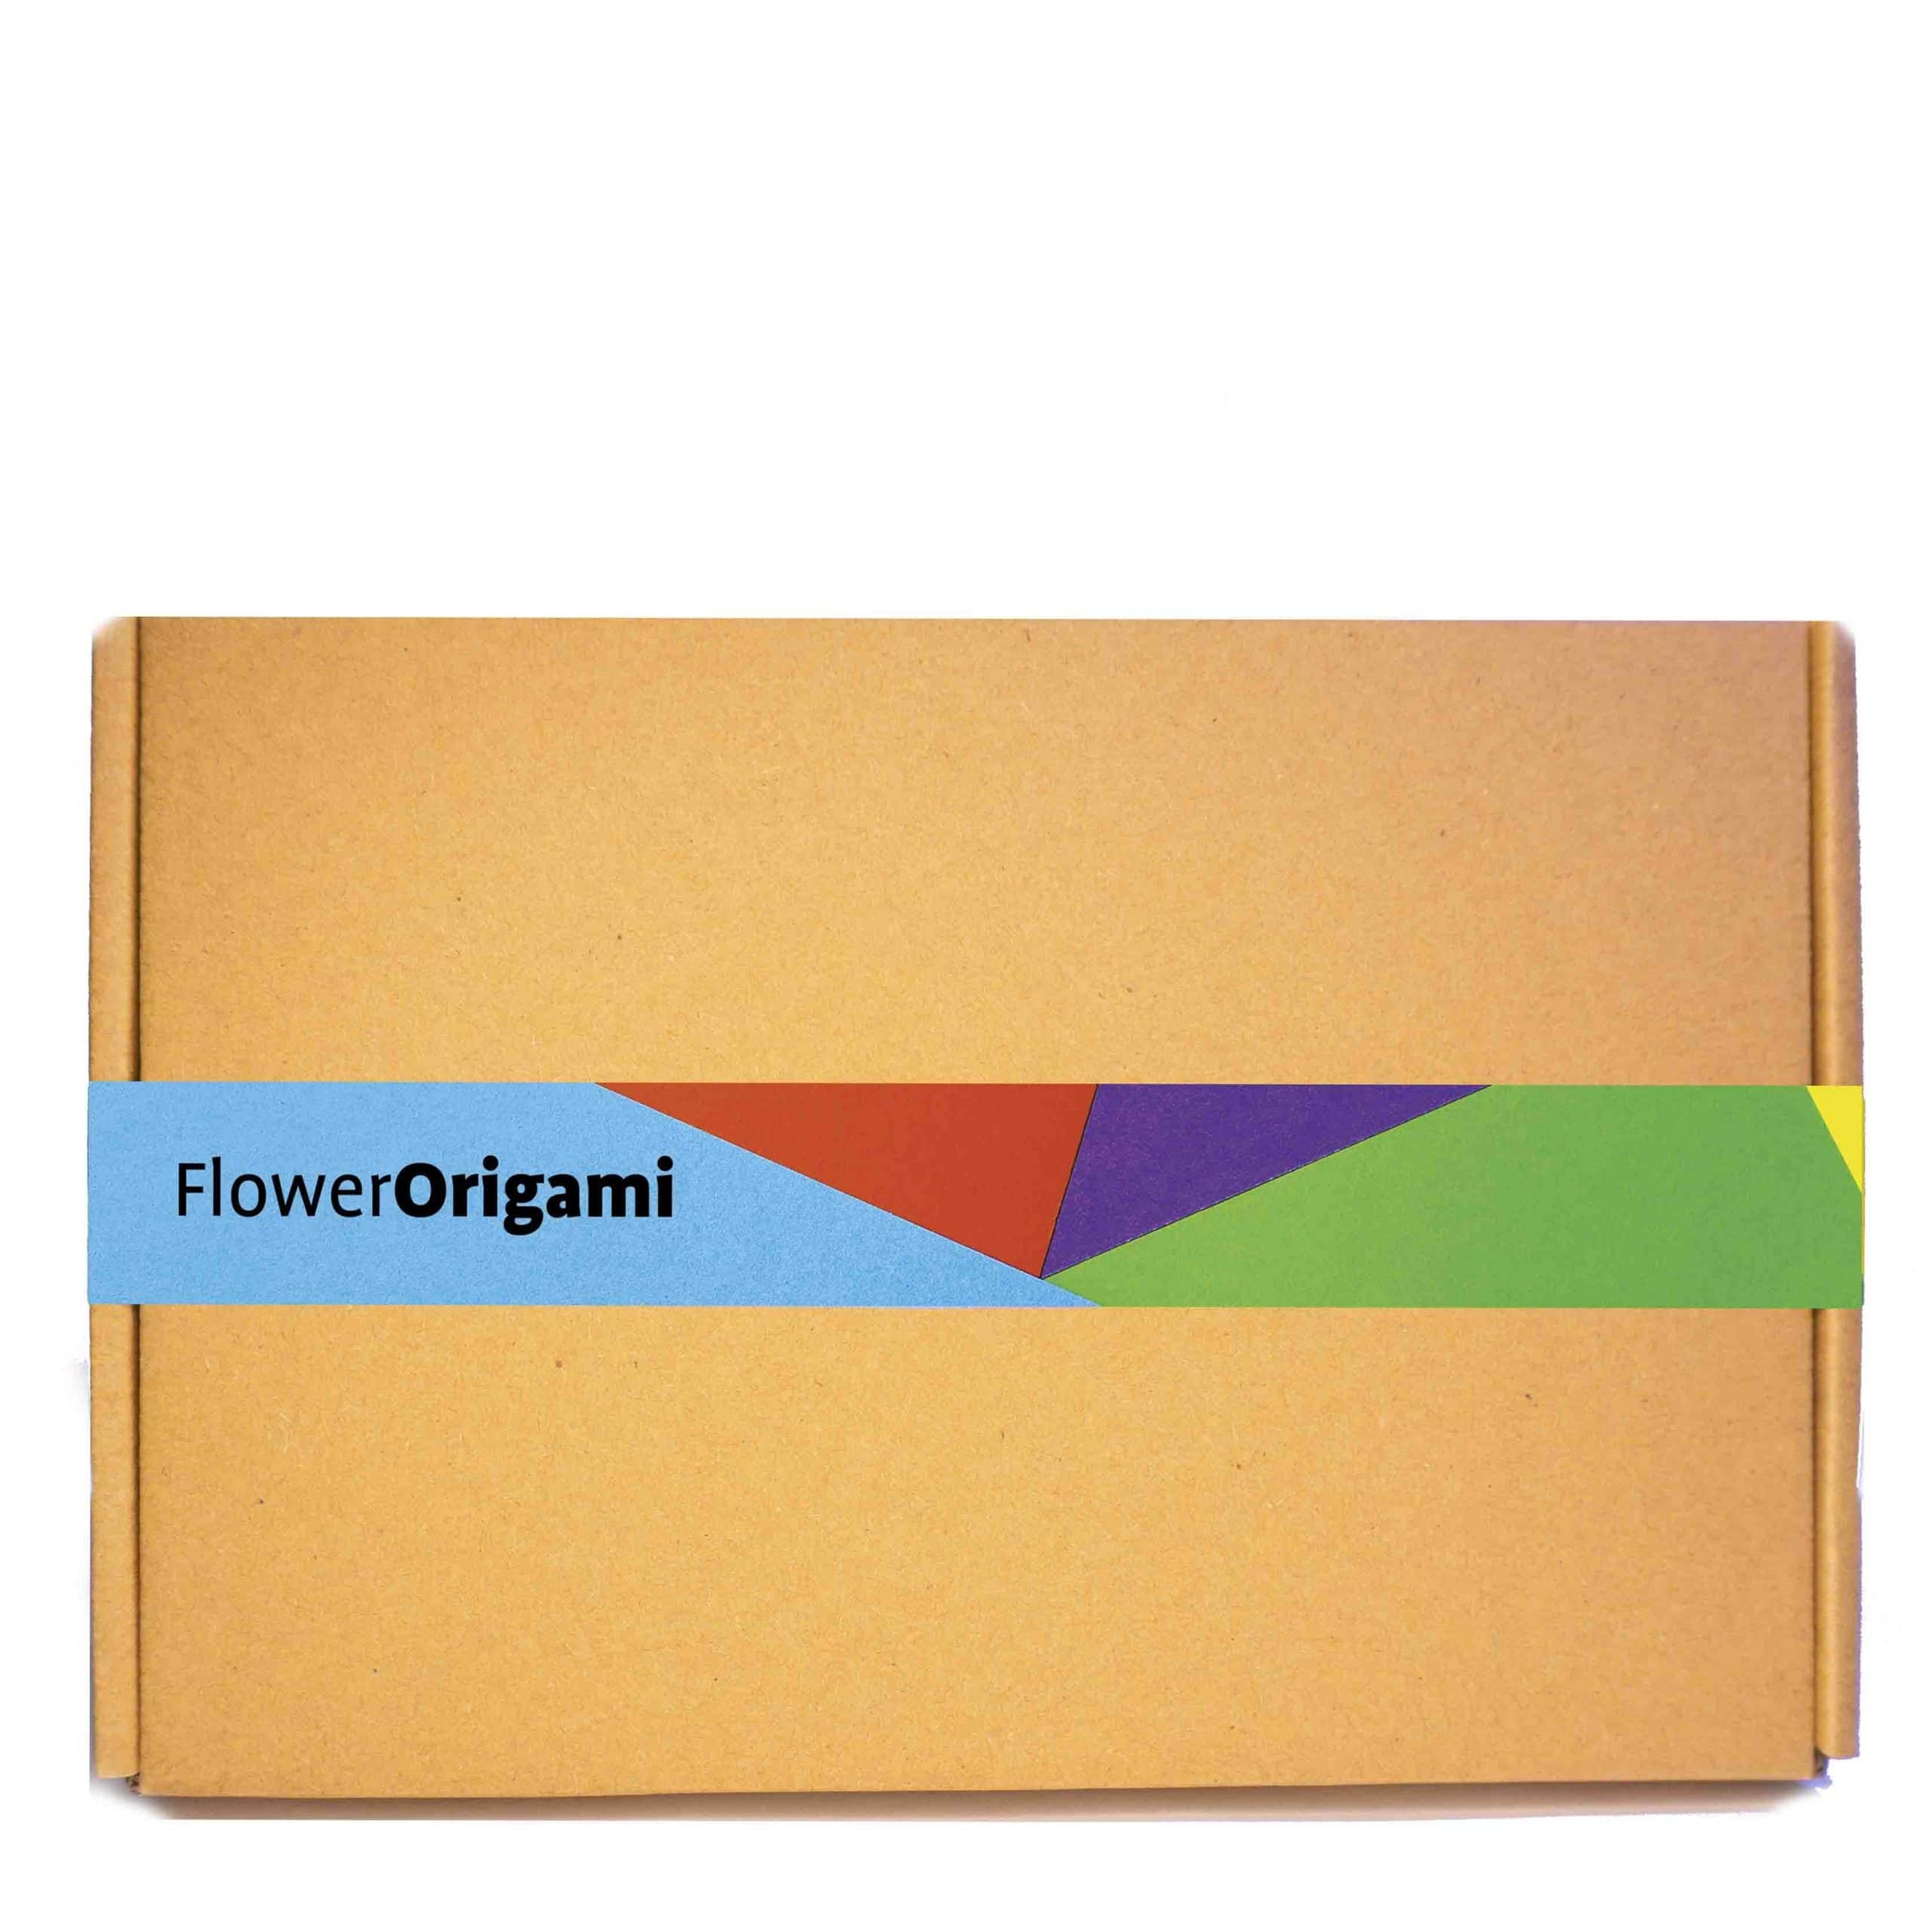 Flower Origami + Albero Vita - Ecofactory